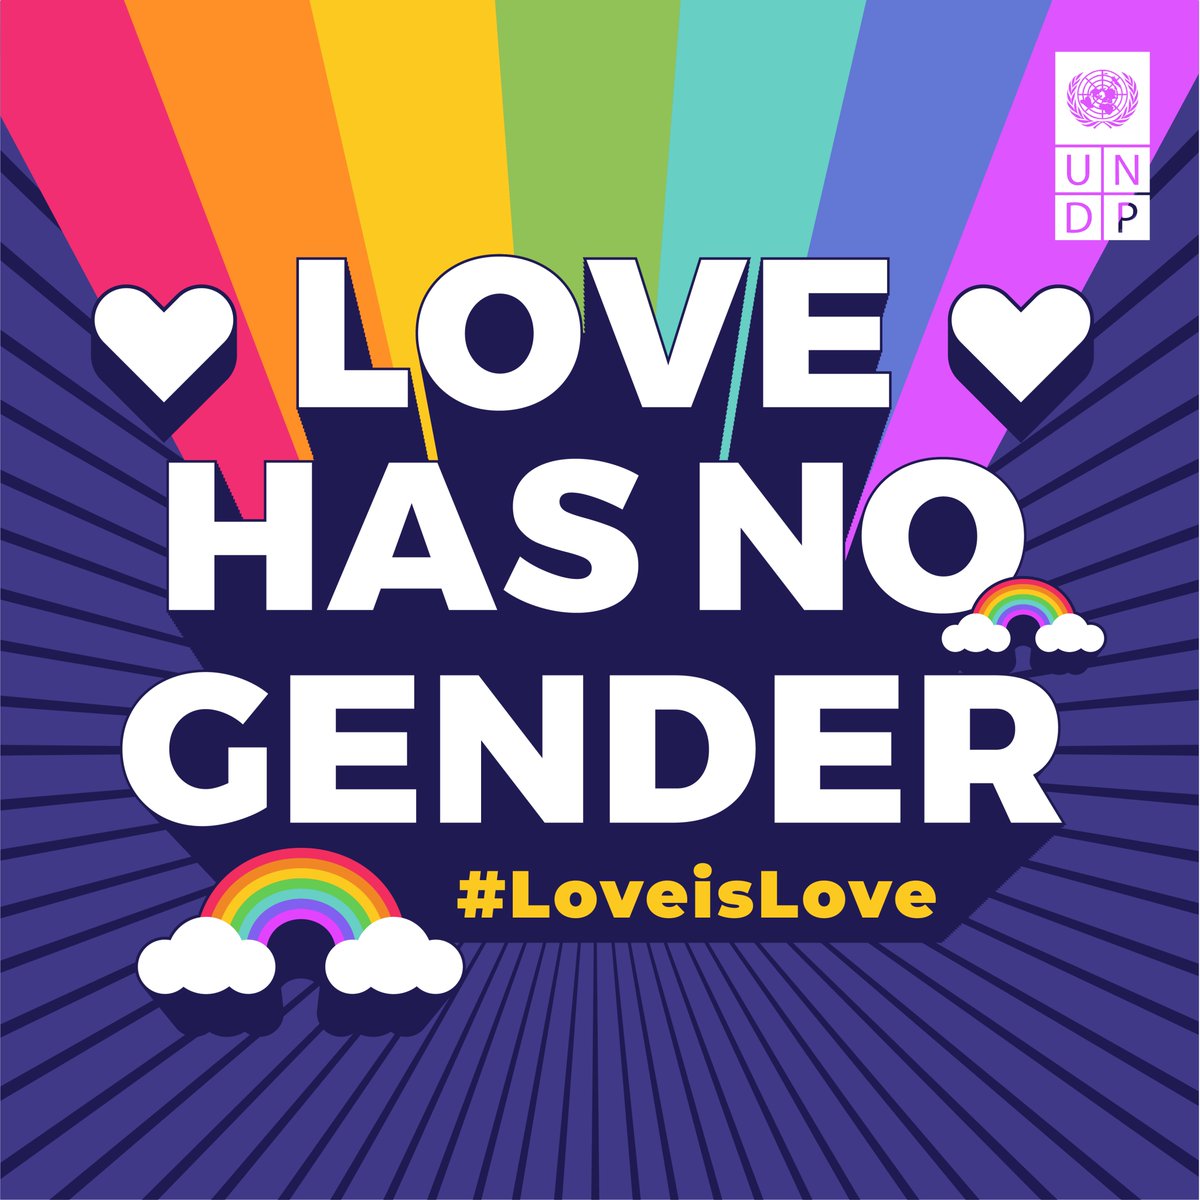 ❤️Because #LOVEisLOVE
🧡Because we want #ZeroDiscrimination
💛Because we #Standup4HumanRights
💚Because we say #NoToHate
💙Because we want to achieve #Agenda2030
💜Because we #LeaveNoOneBehind

.... Because this is #PrideMonth